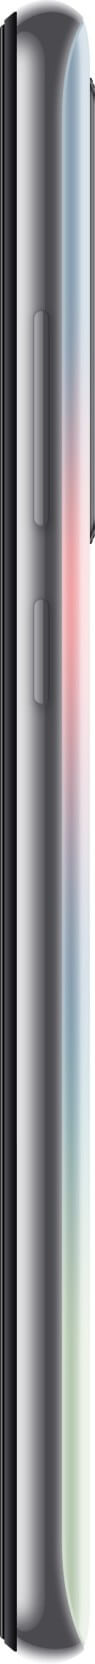 Xiaomi Redmi Note 8 Pro (64 GB, 6 GB RAM), 20MP Front Camera, 4500 mAh Li-polymer Battery - Pearl White